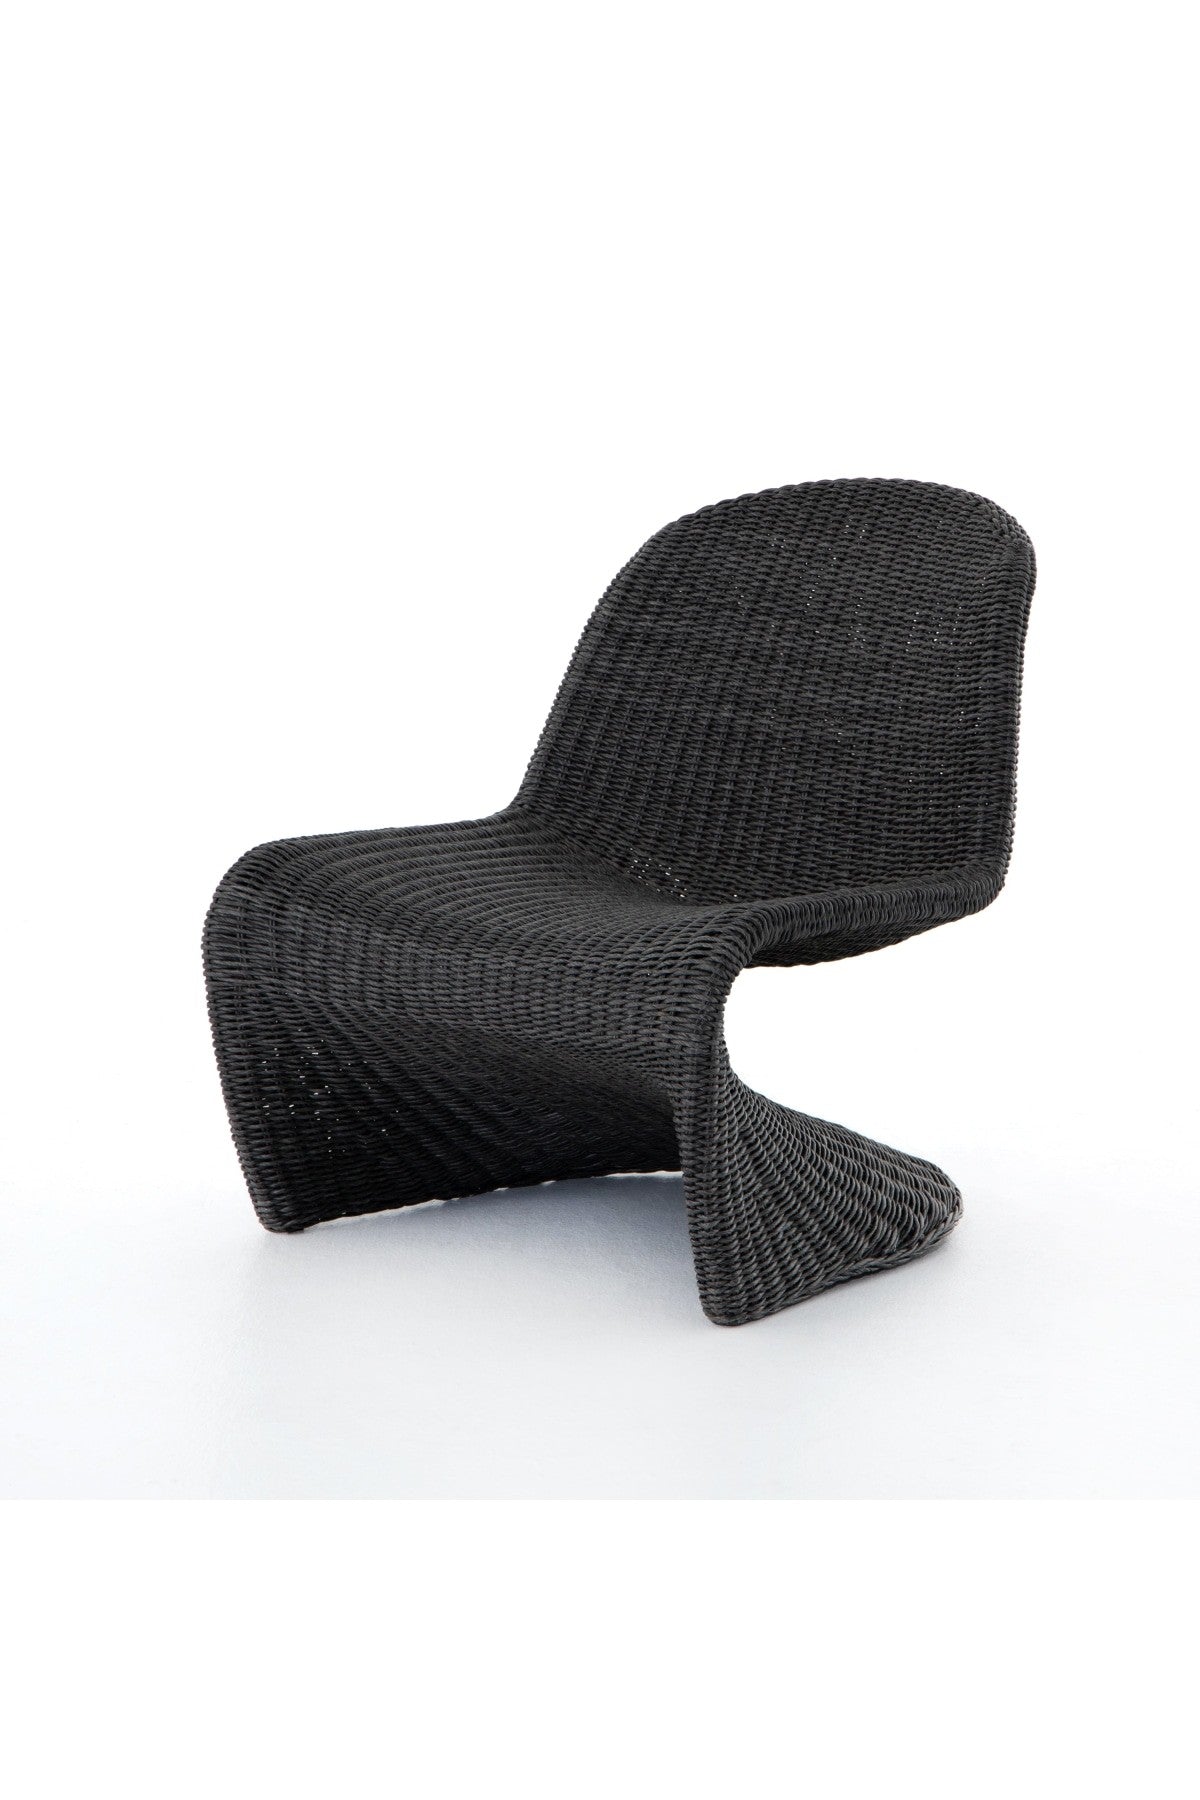 Klein Outdoor Accent Chair - Vintage Coal